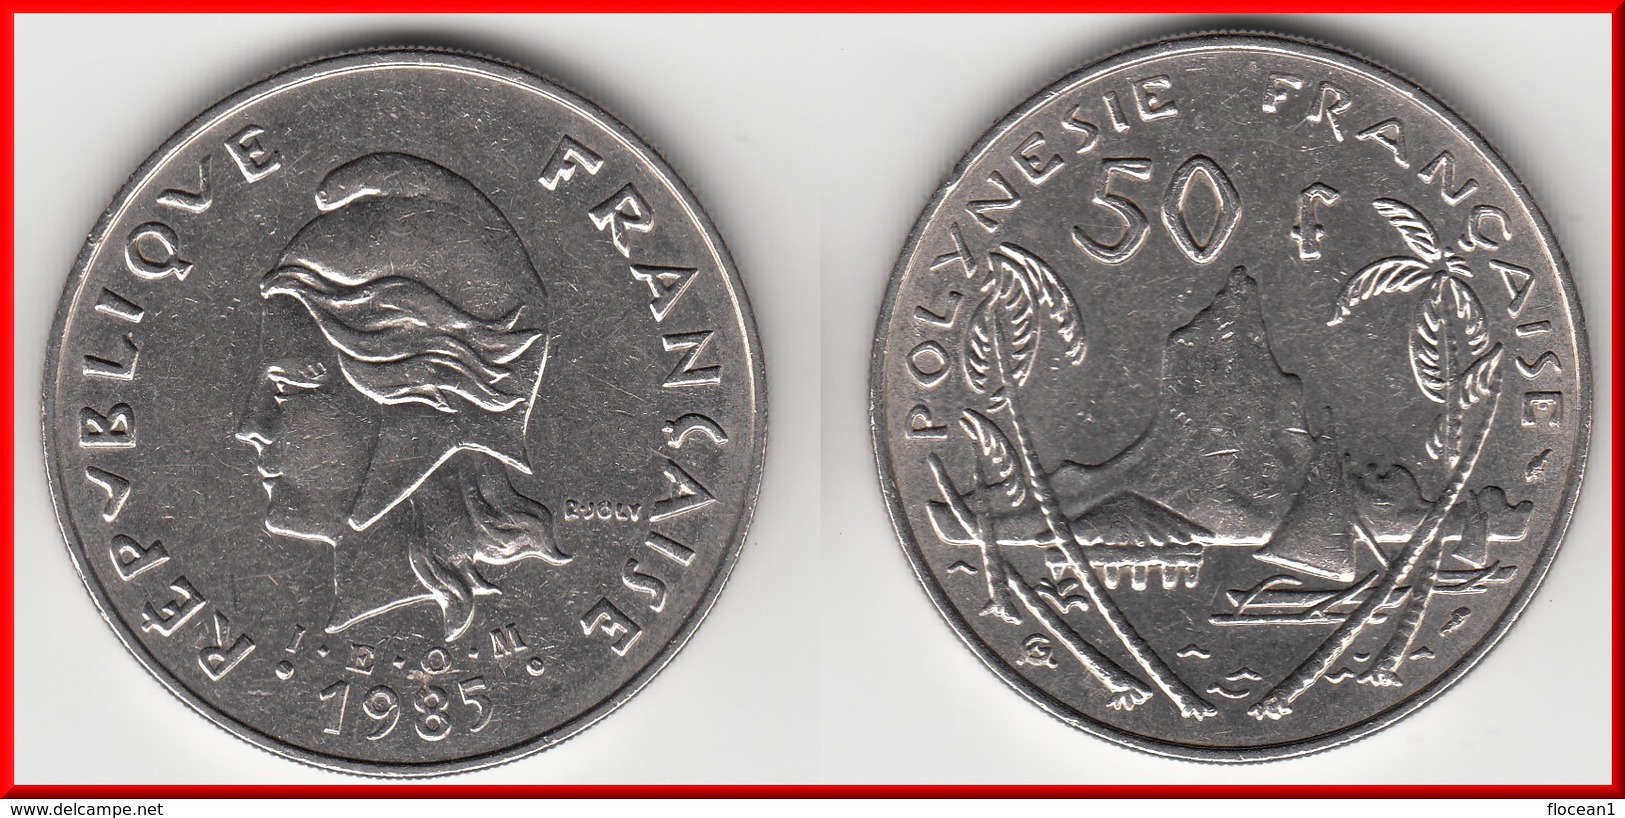 **** POLYNESIE FRANCAISE- FRENCH POLYNESIA - 50 FRANCS 1985 **** EN ACHAT IMMEDIAT !!! - Polinesia Francese